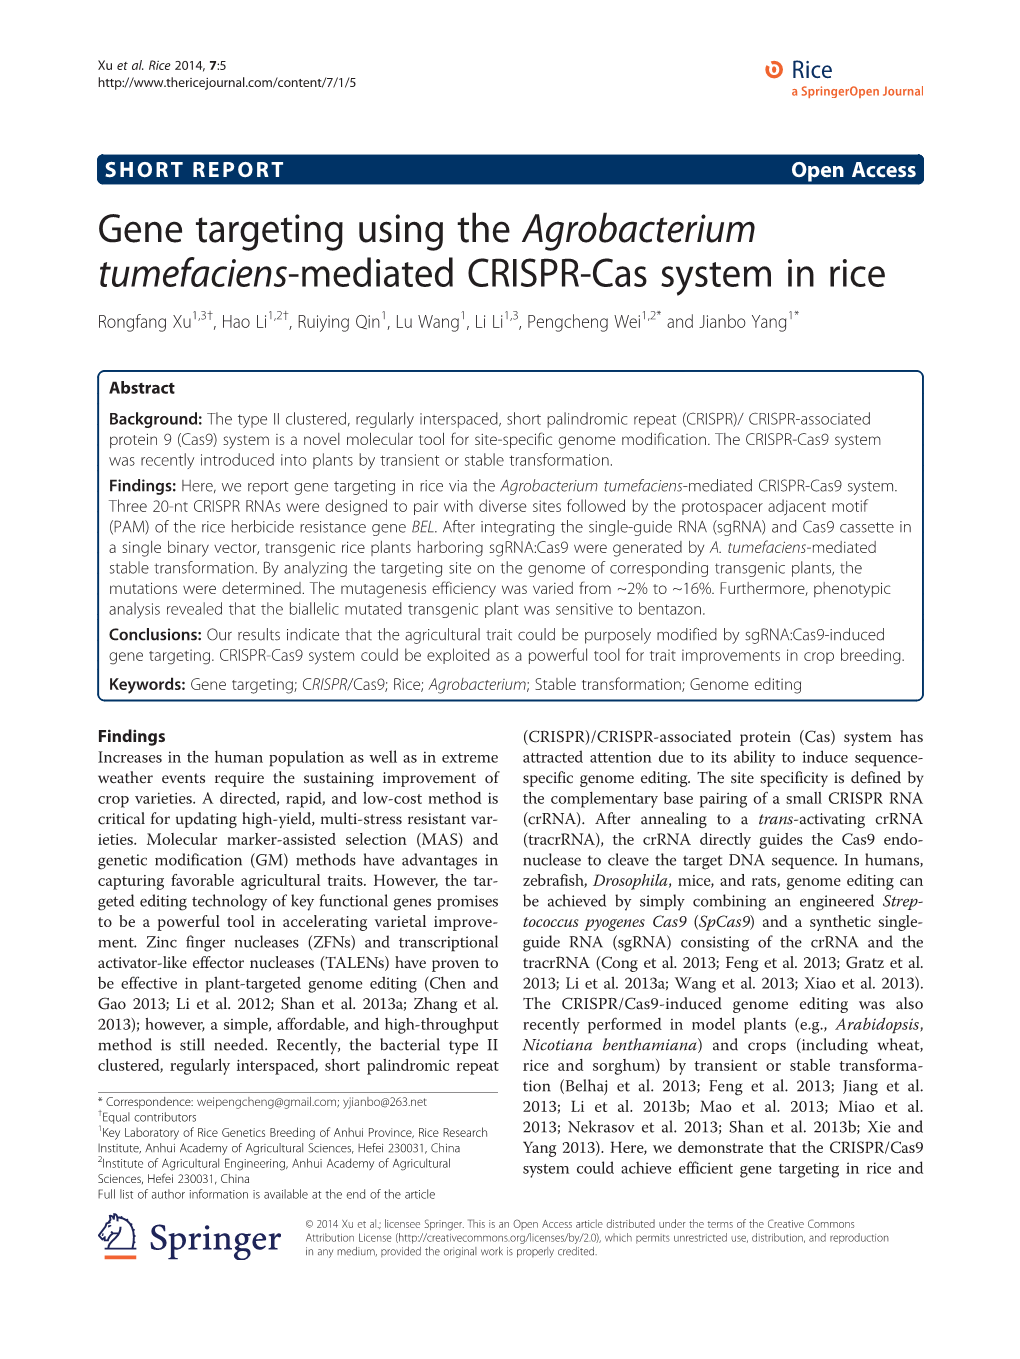 Gene Targeting Using the Agrobacterium Tumefaciens